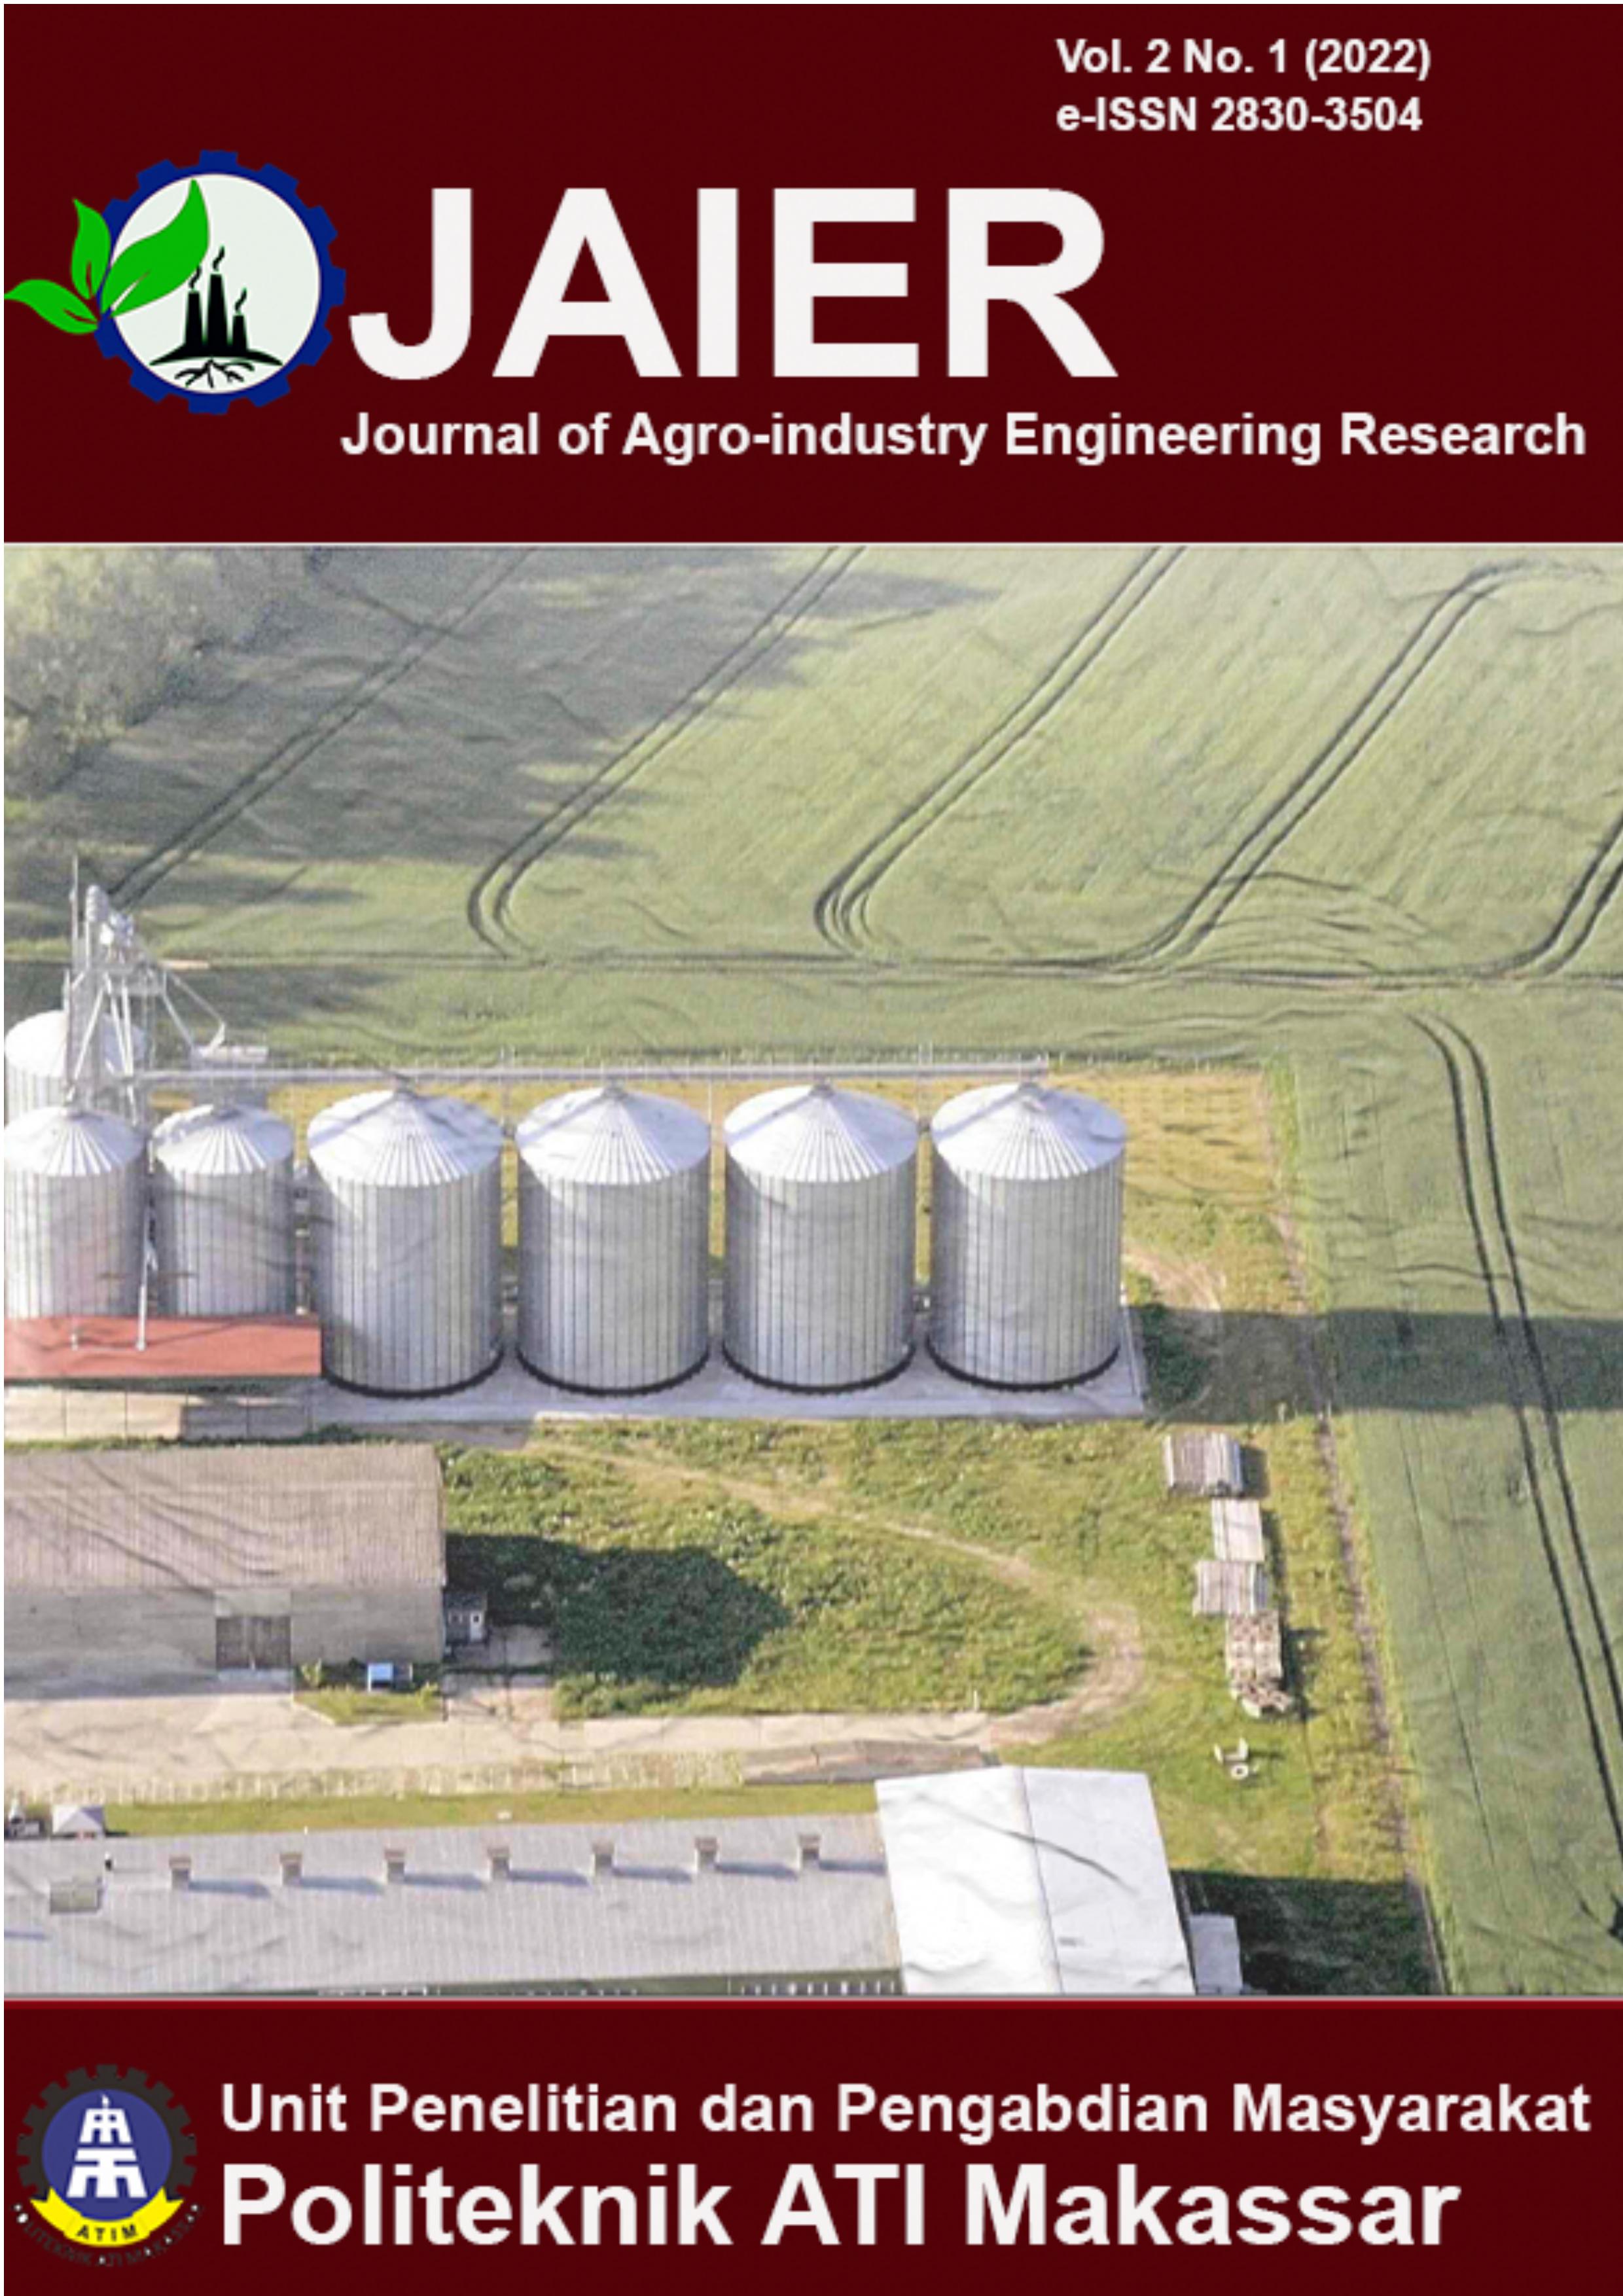 					Lihat Vol 2 No 1 (2022): Vol 2 No 1 (2022): Journal of Agro-Industry Engineering Research
				